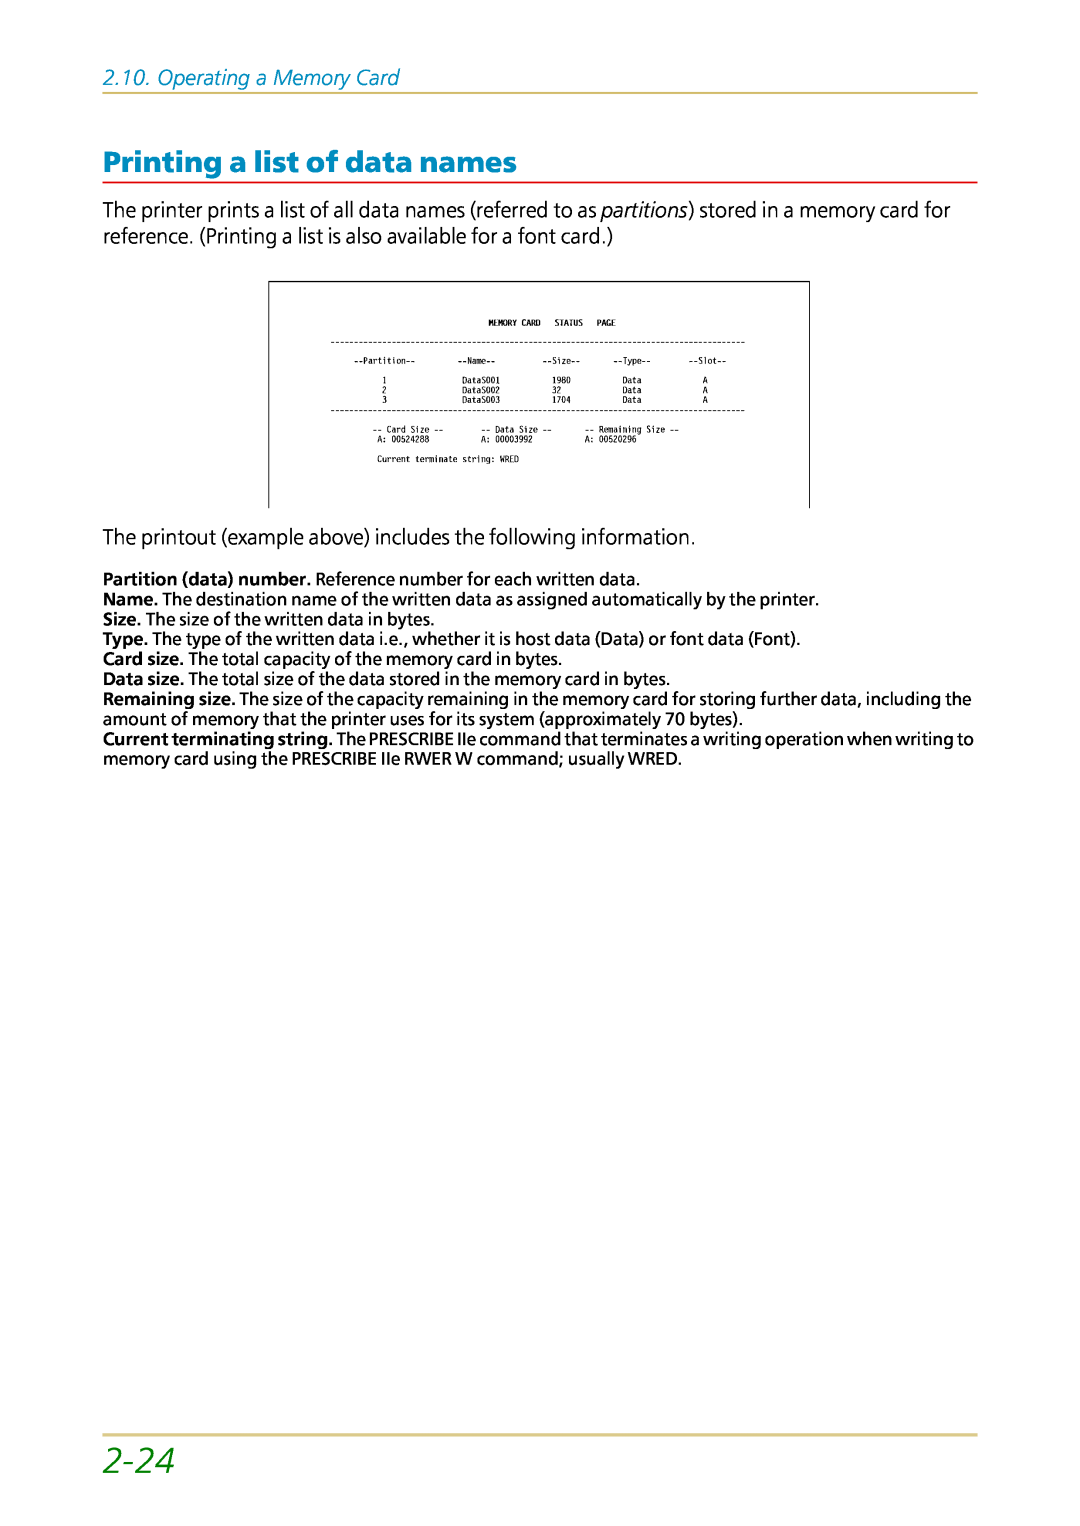 Kyocera FS-1700 user manual 2-24, Printing a list of data names, Operating a Memory Card 